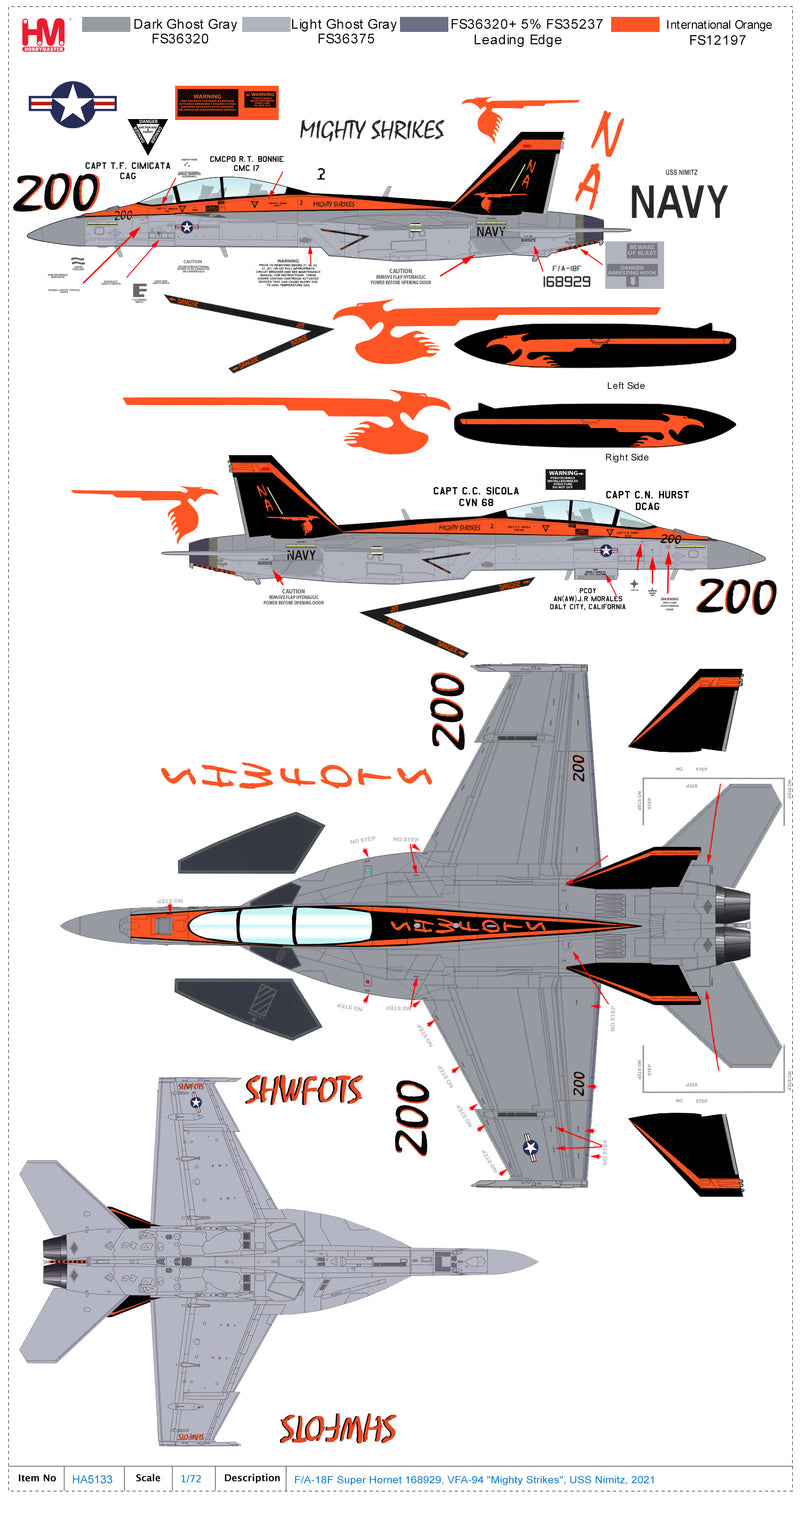 Boeing F/A-18F Super Hornet, VFA-94 “Mighty Strikes”, USS Nimitz (CVN-68)  2021, 1:72 Scale Diecast Model Markings